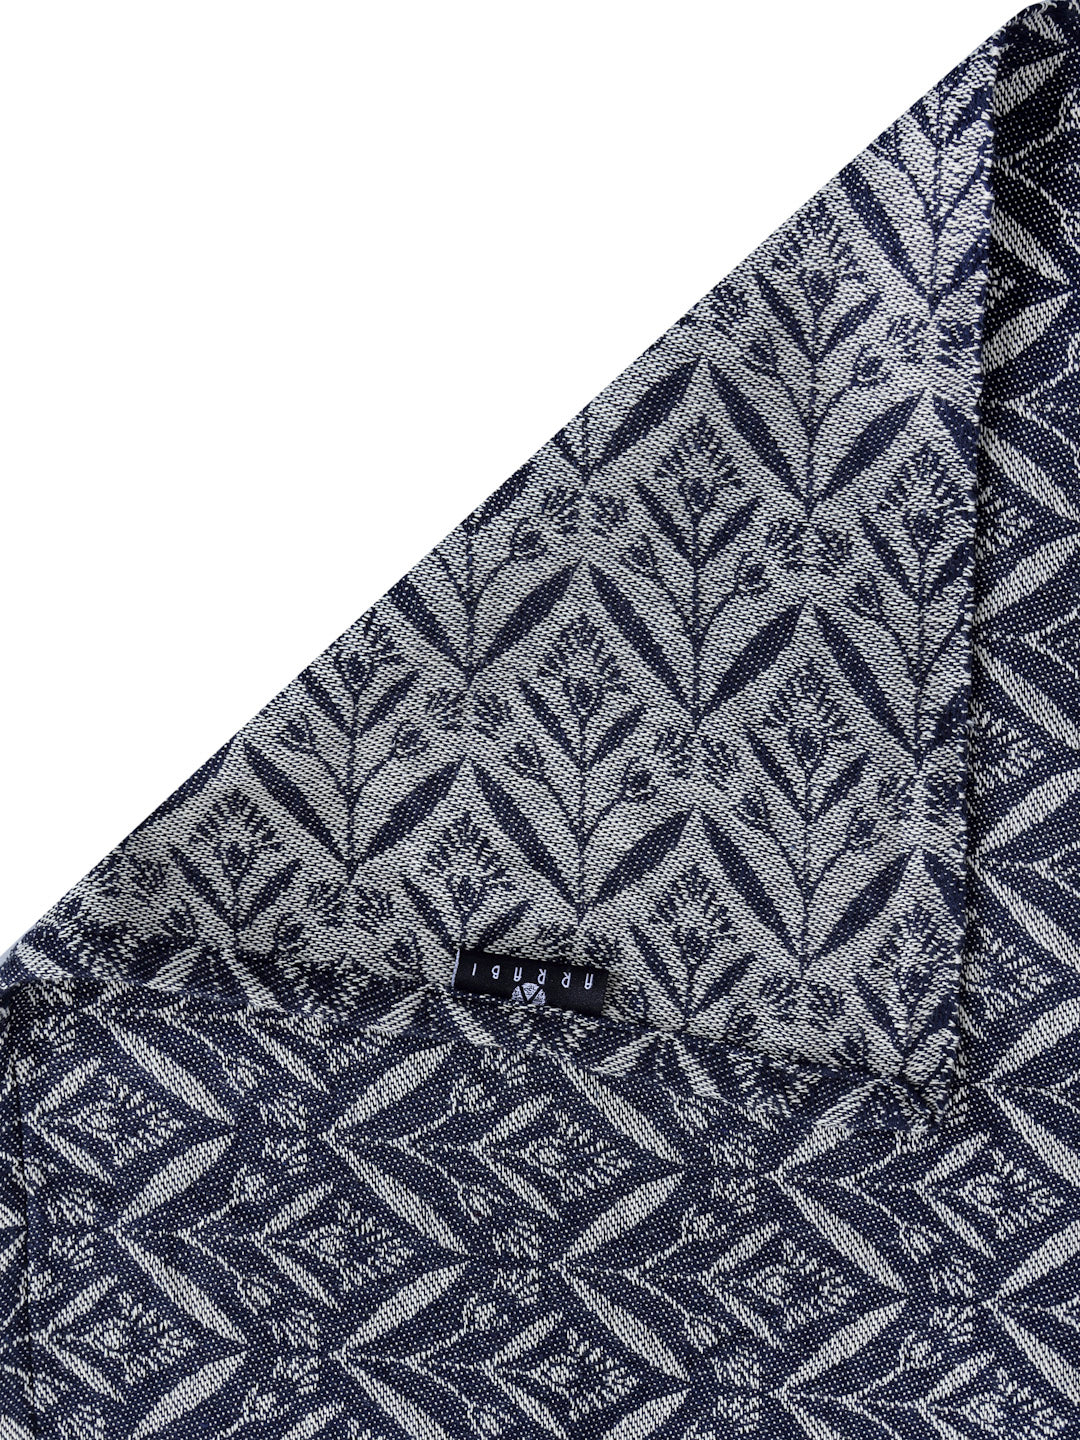 Arrabi Black Leaf Handwoven Cotton Super King Size Bedsheet with 2 Pillow Covers (270 X 270 cm)